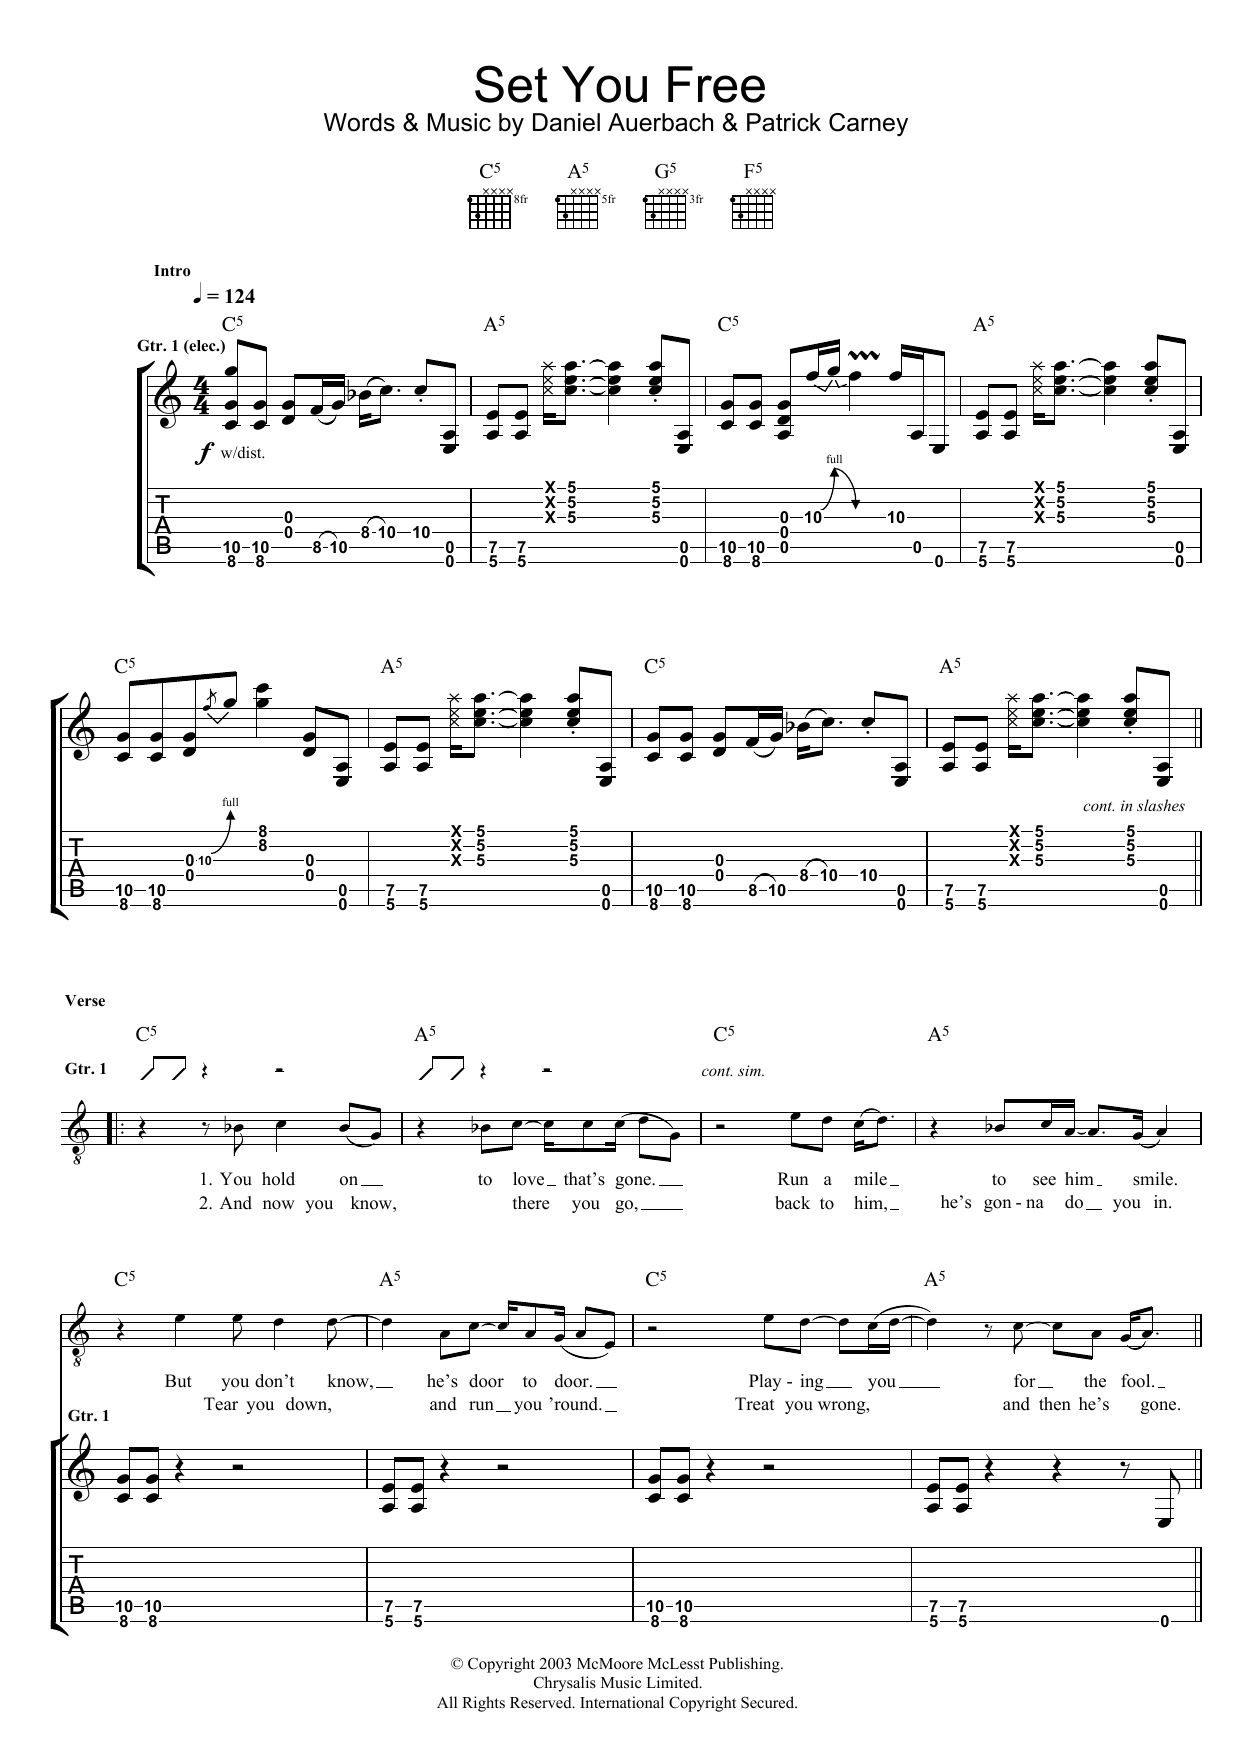 The Black Keys Set You Free Sheet Music Notes & Chords for Guitar Tab - Download or Print PDF